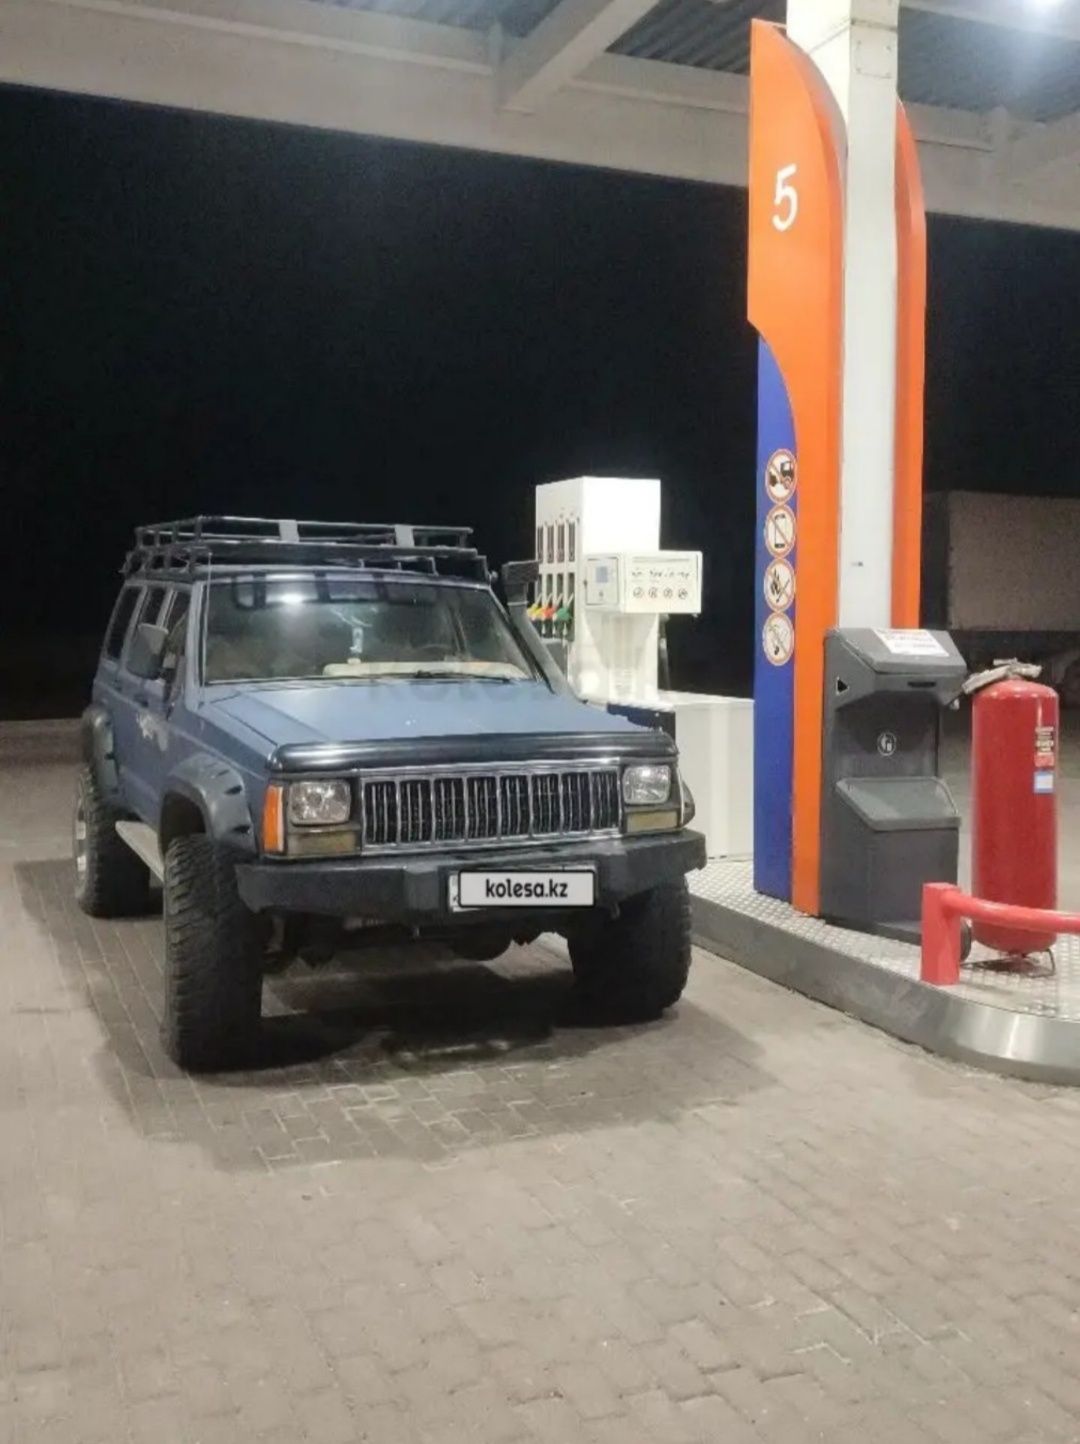 Продам Jeep cherokee XJ 1994г.в объем 4л бензин